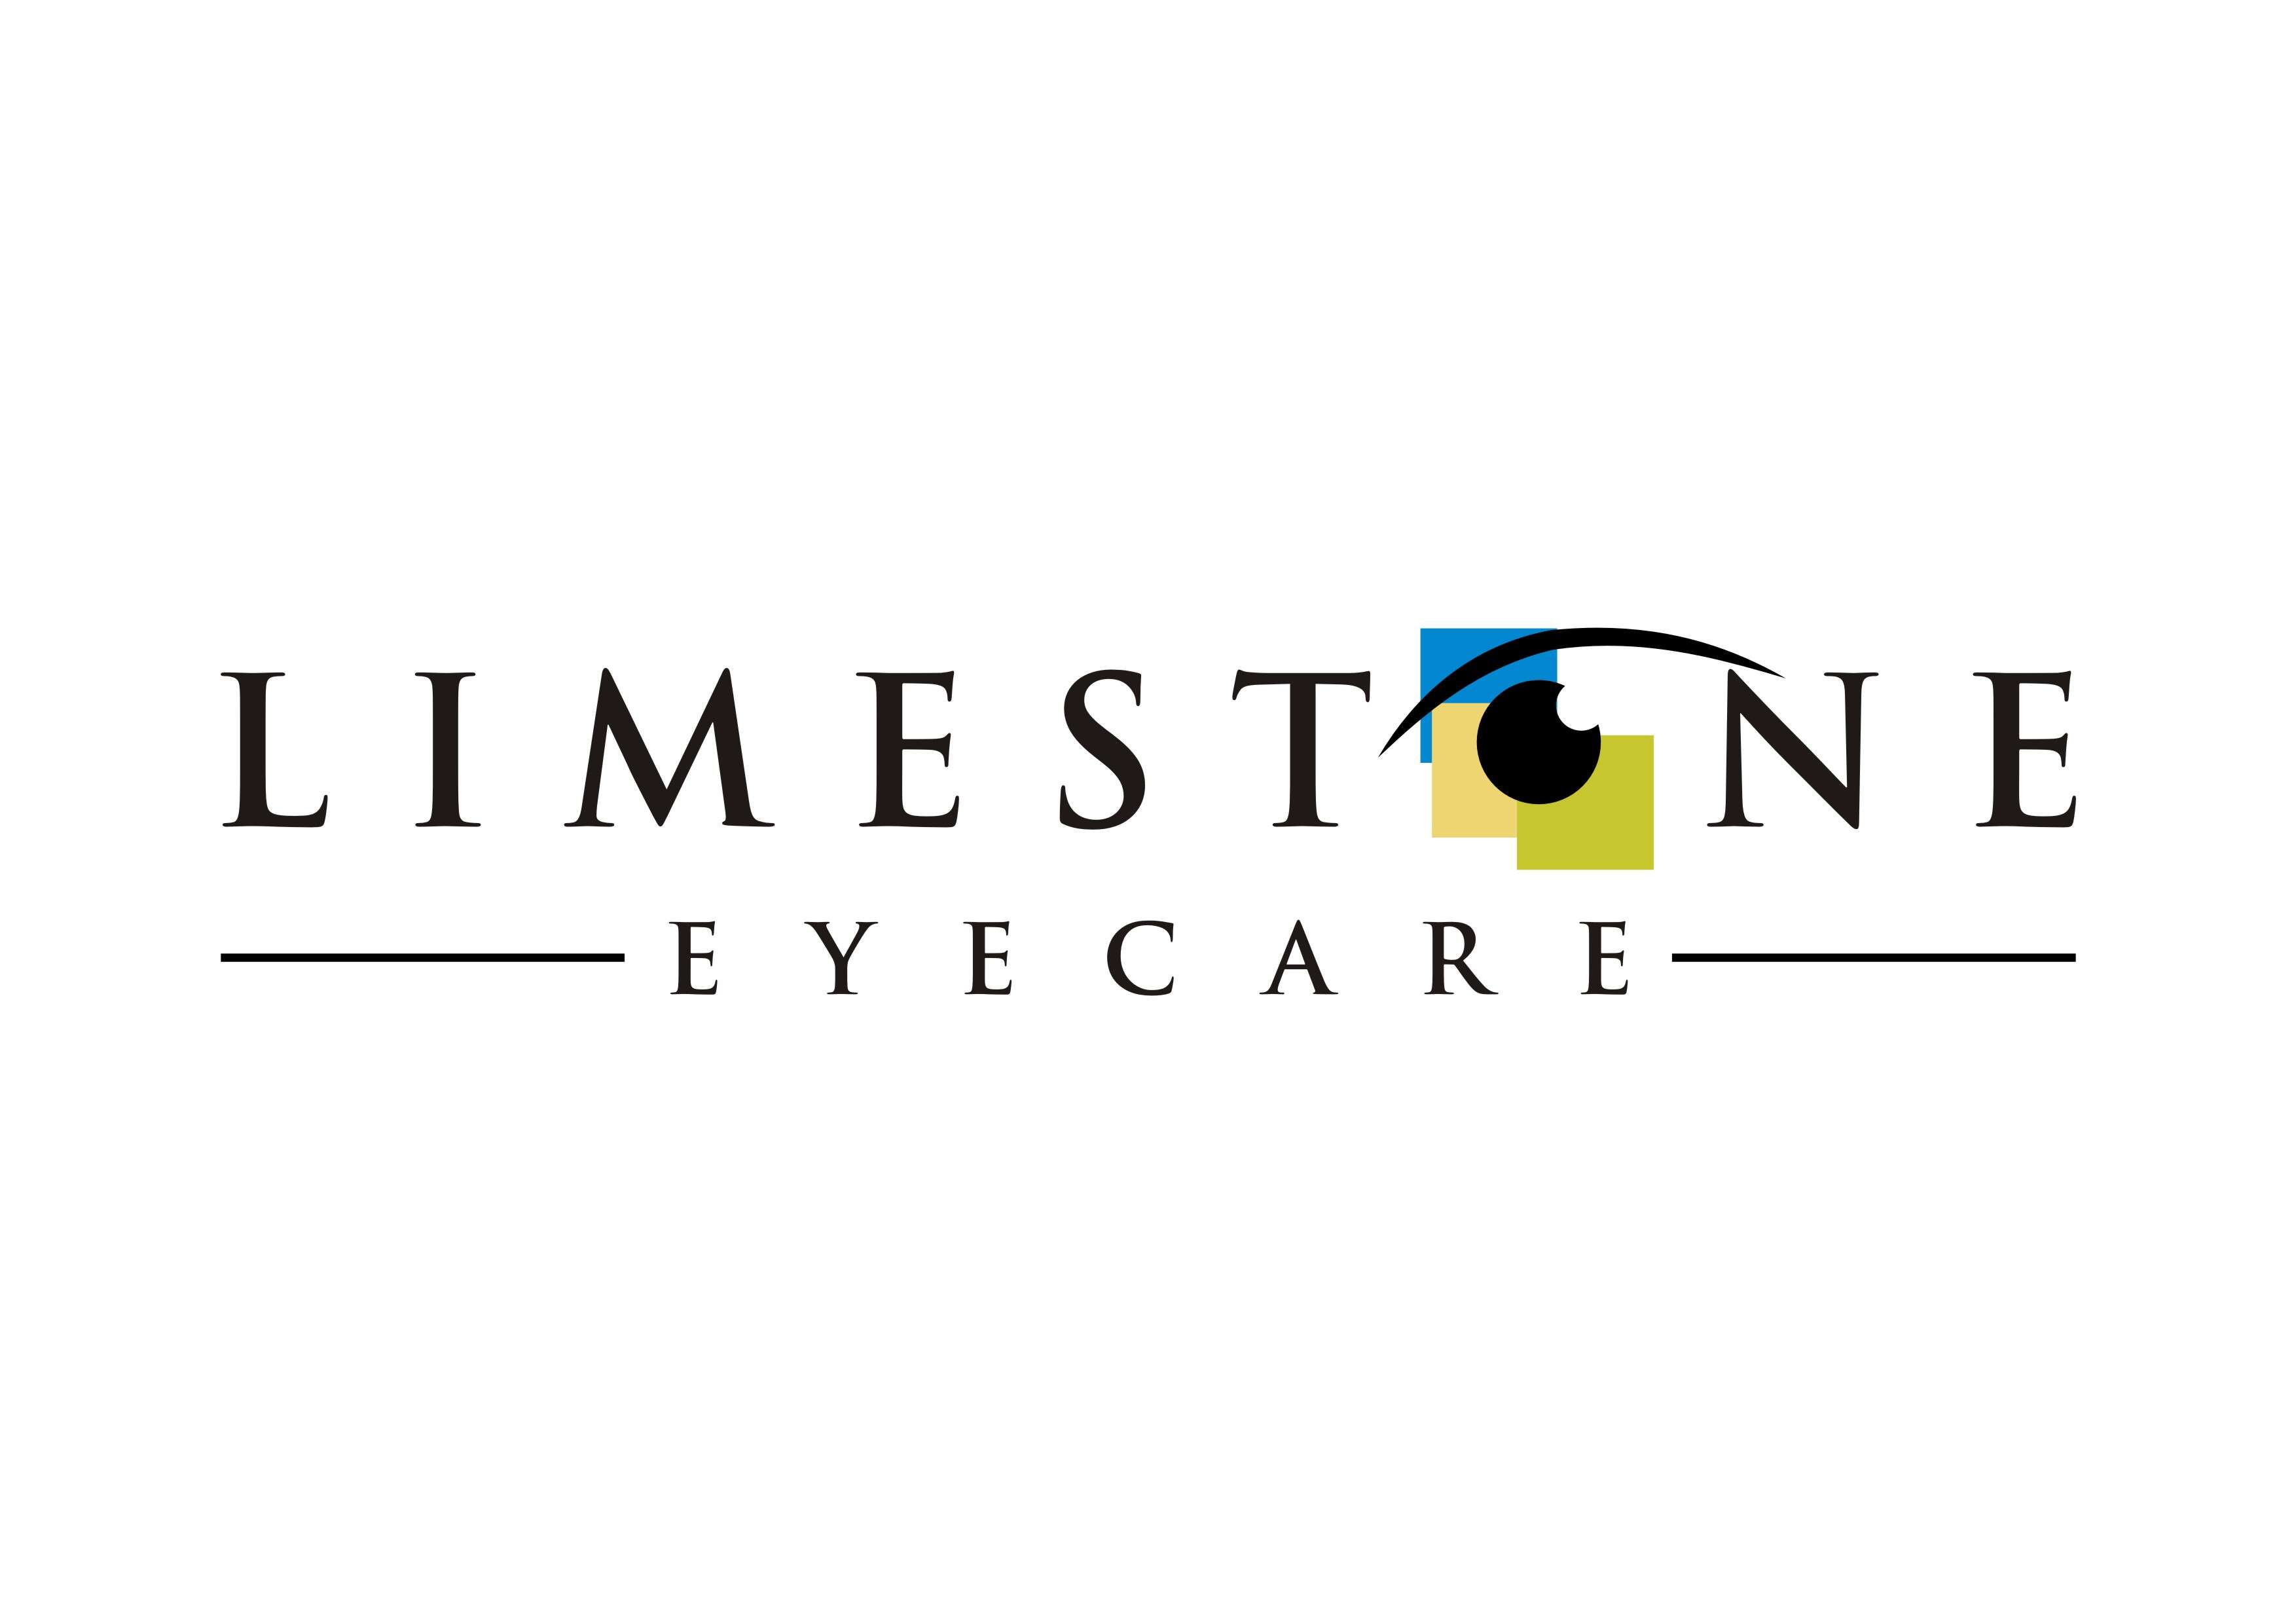 Limestone Eyecare